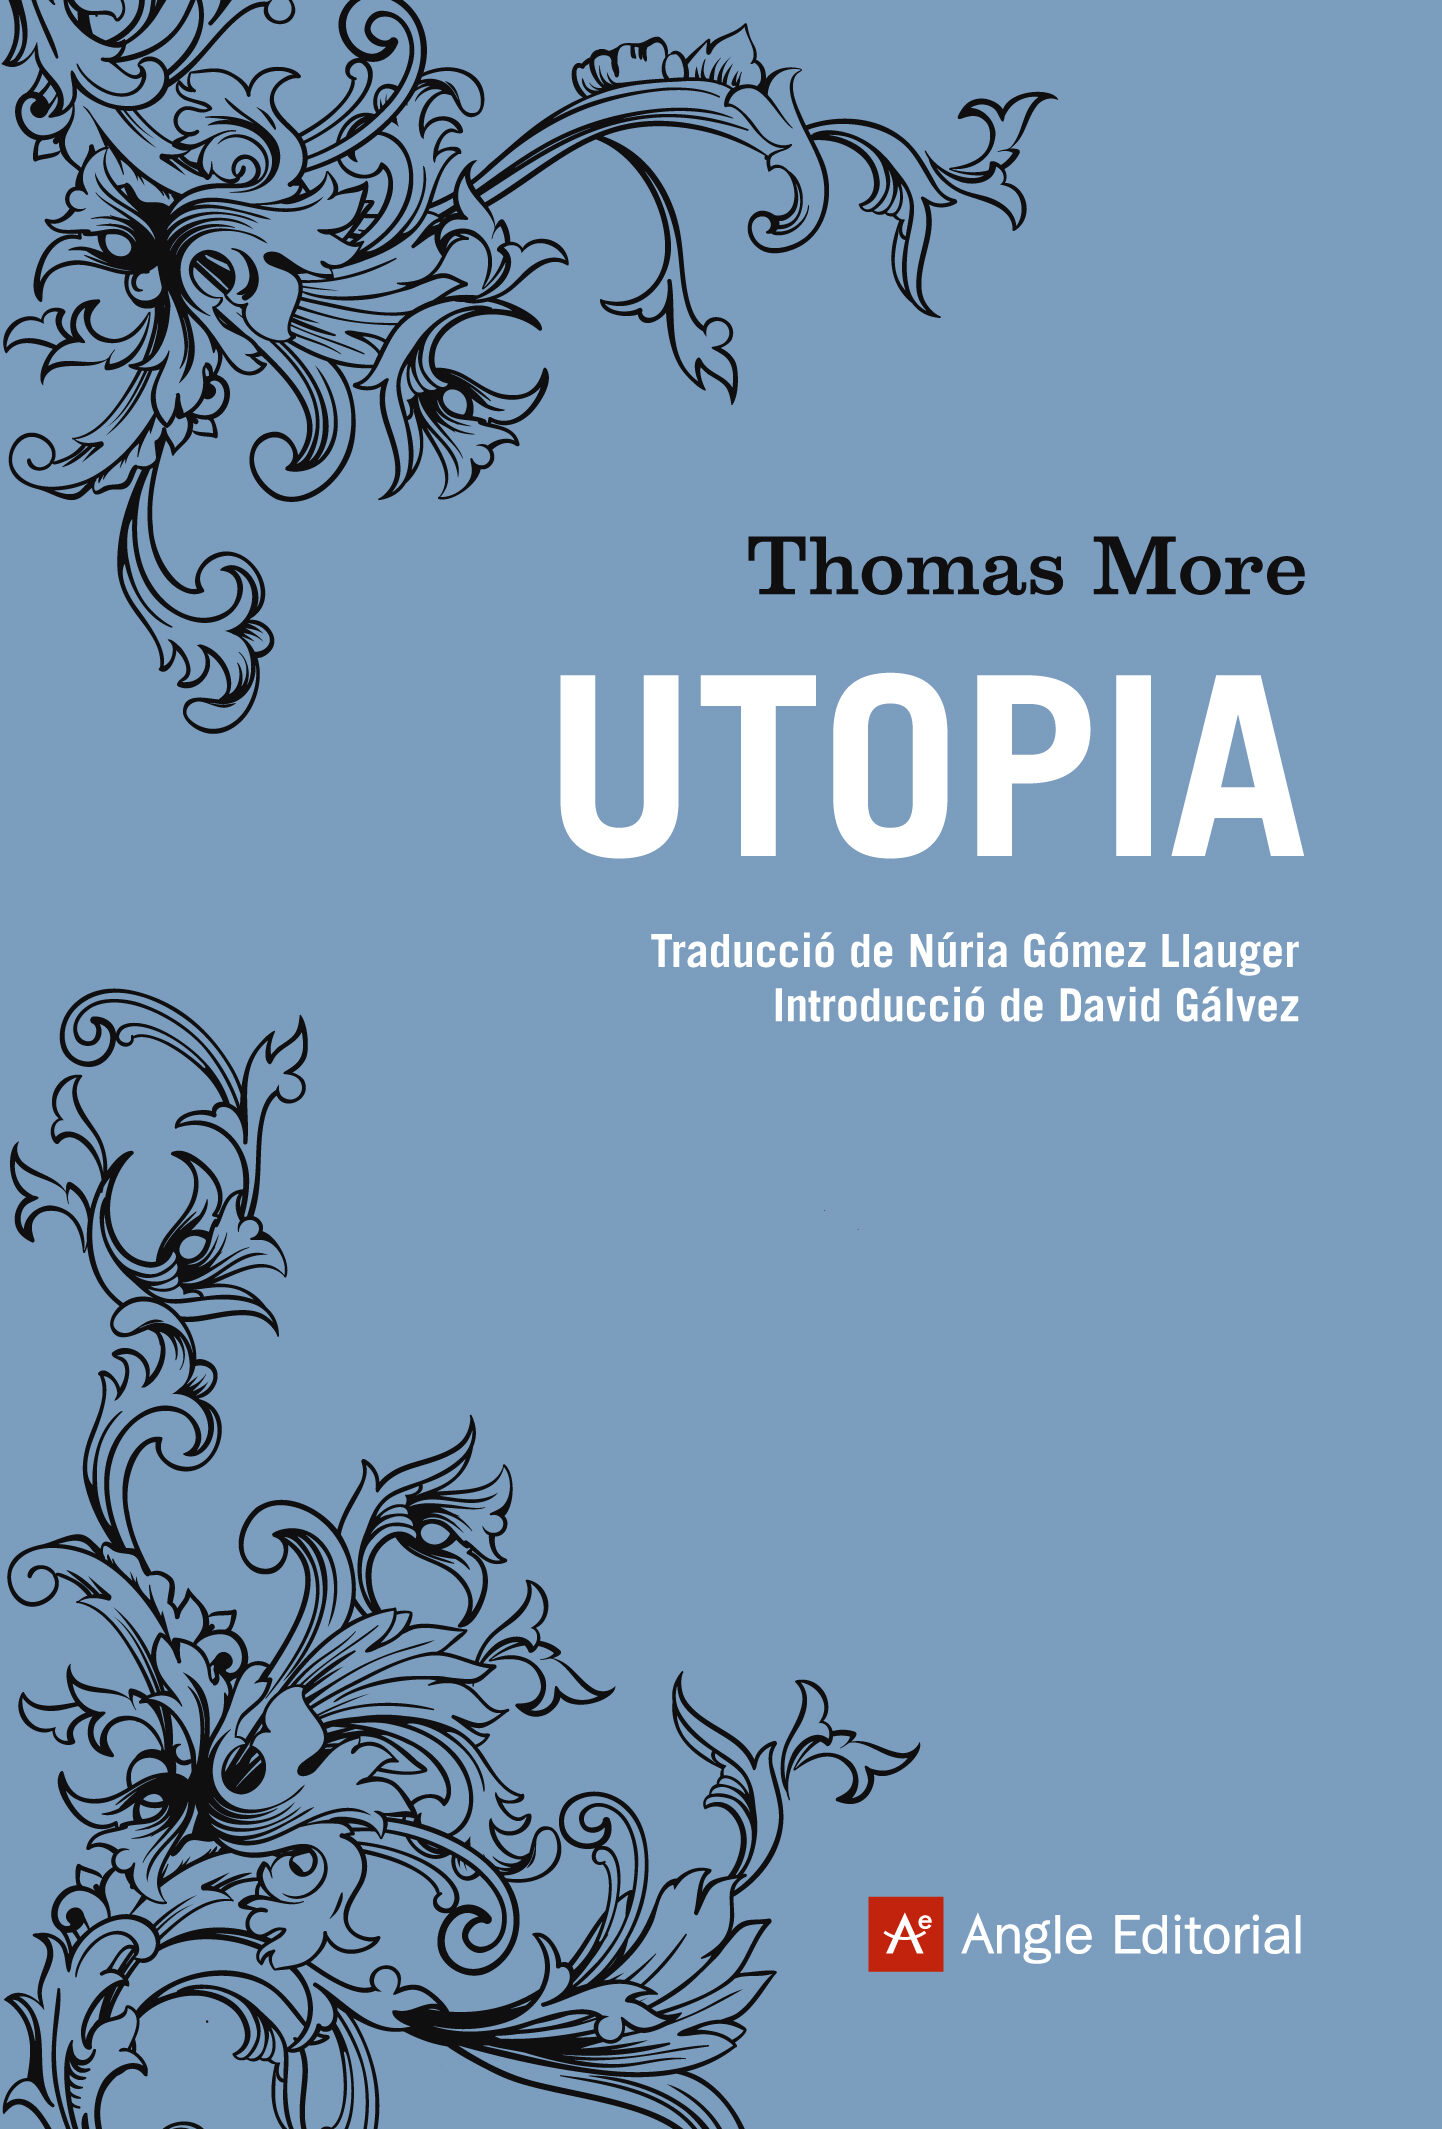 utopia thomas more book 3rd edition